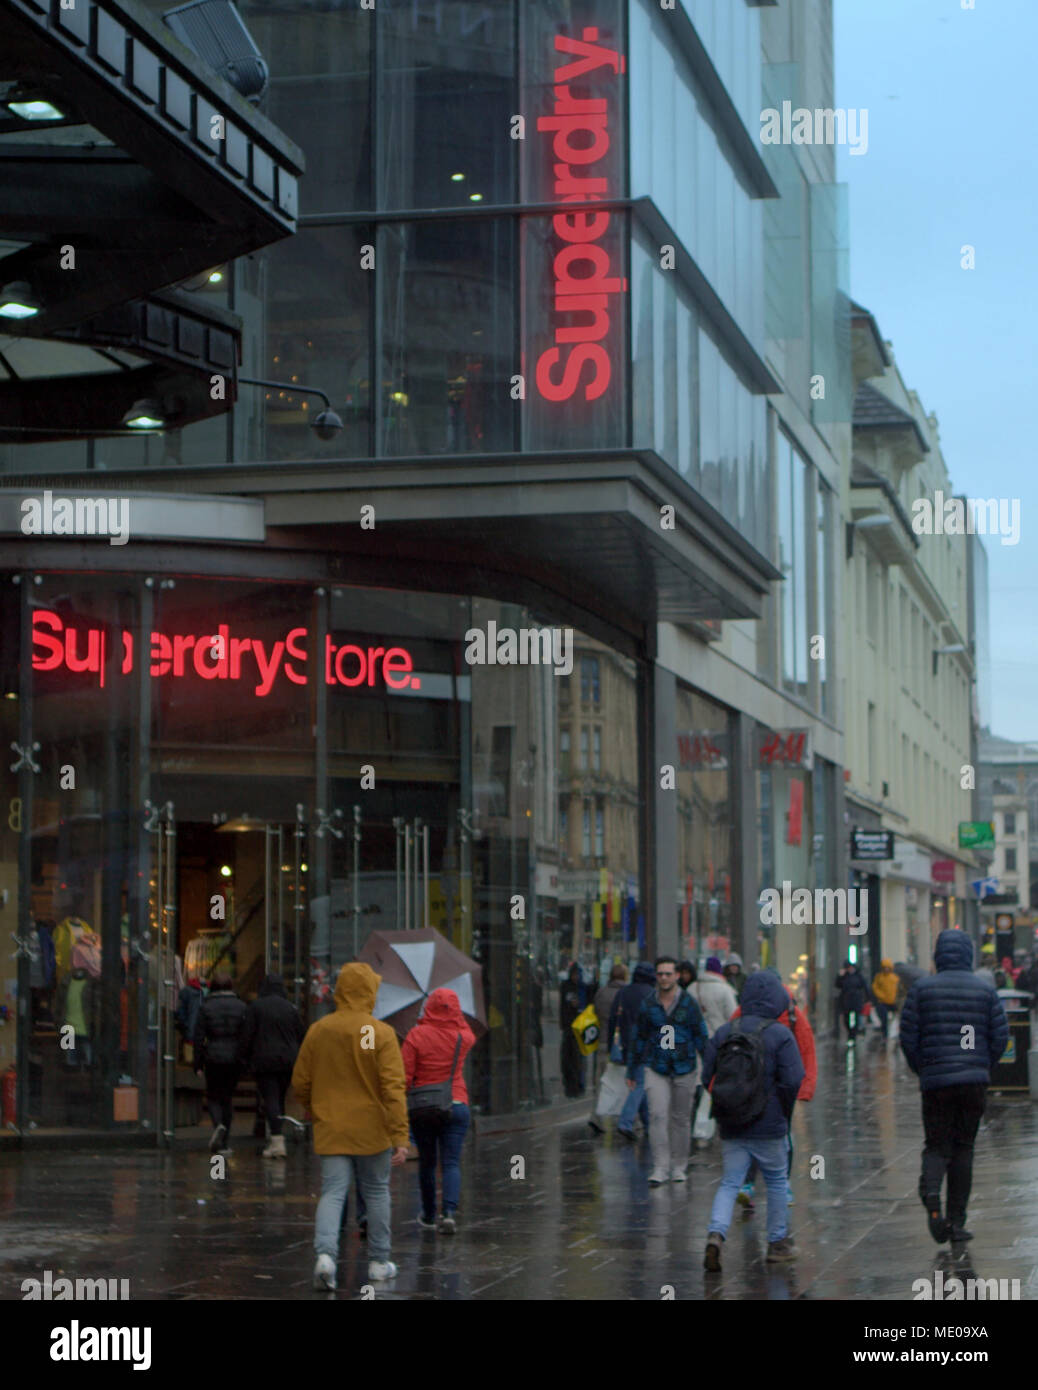 Viento húmedo lloviendo superdry store tienda shopping Argyle Street, Glasgow, Reino Unido Foto de stock